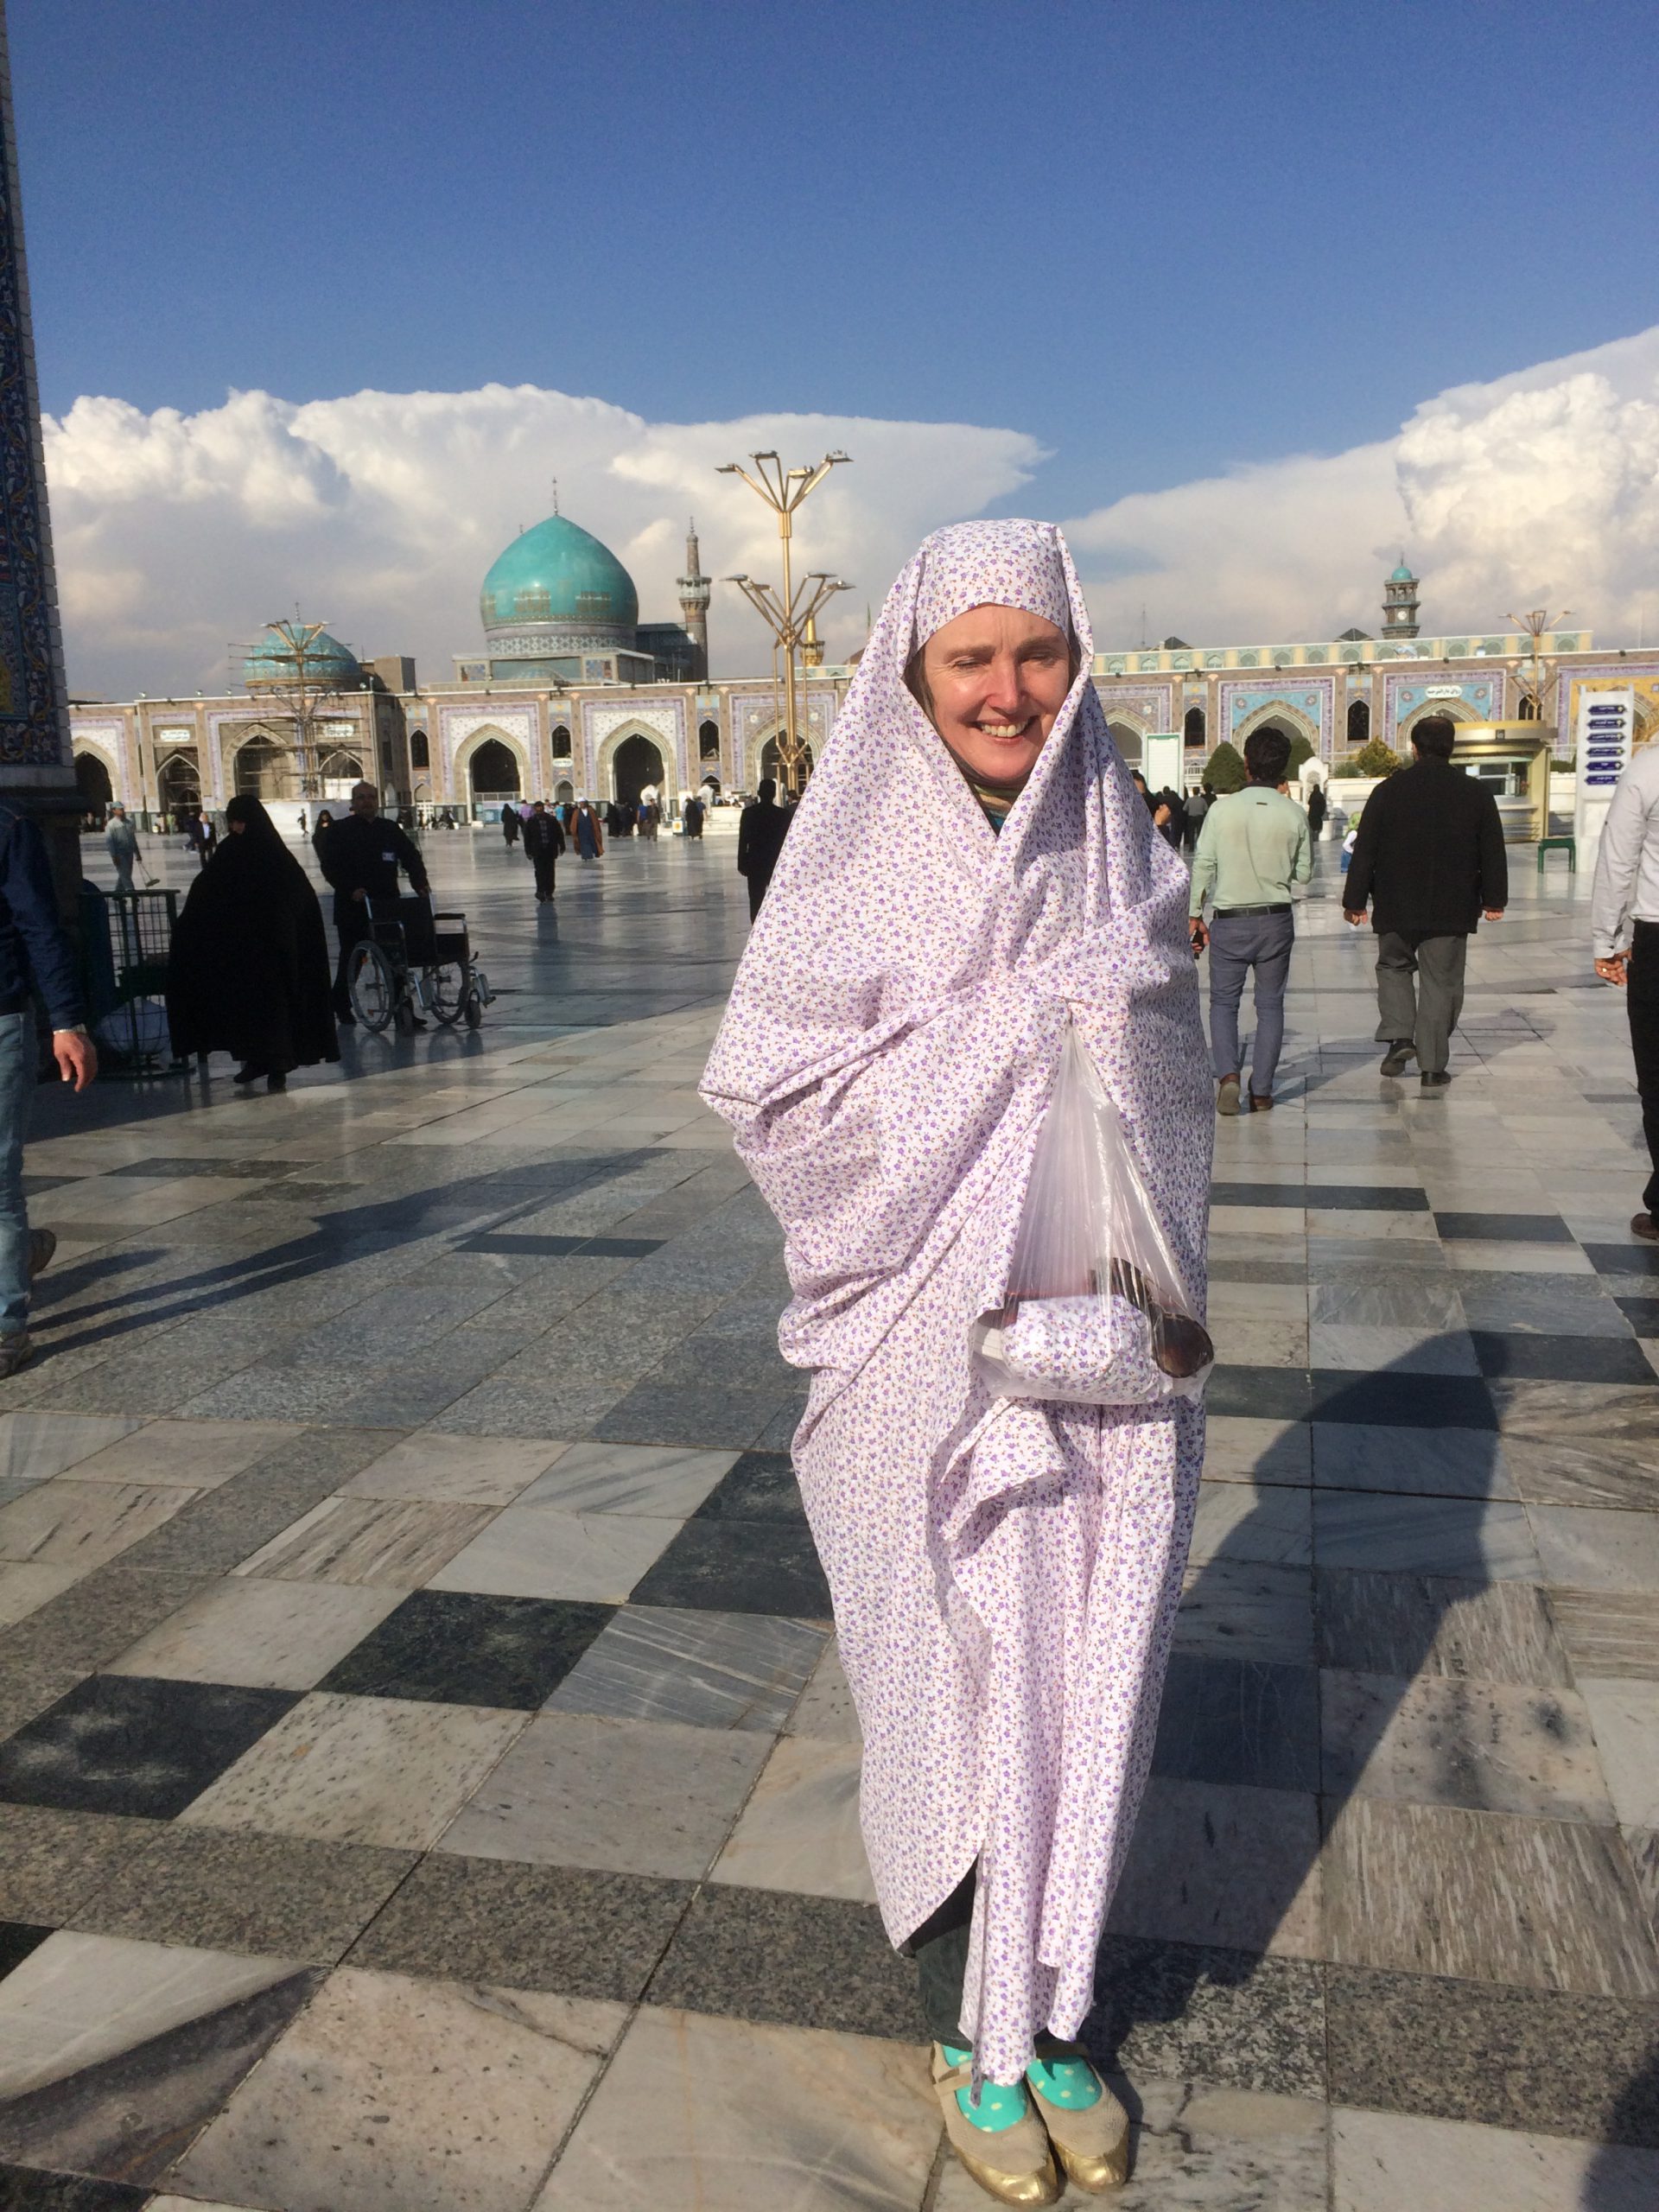 Dress Code for the Holy Shrine of Mashhad | Iran